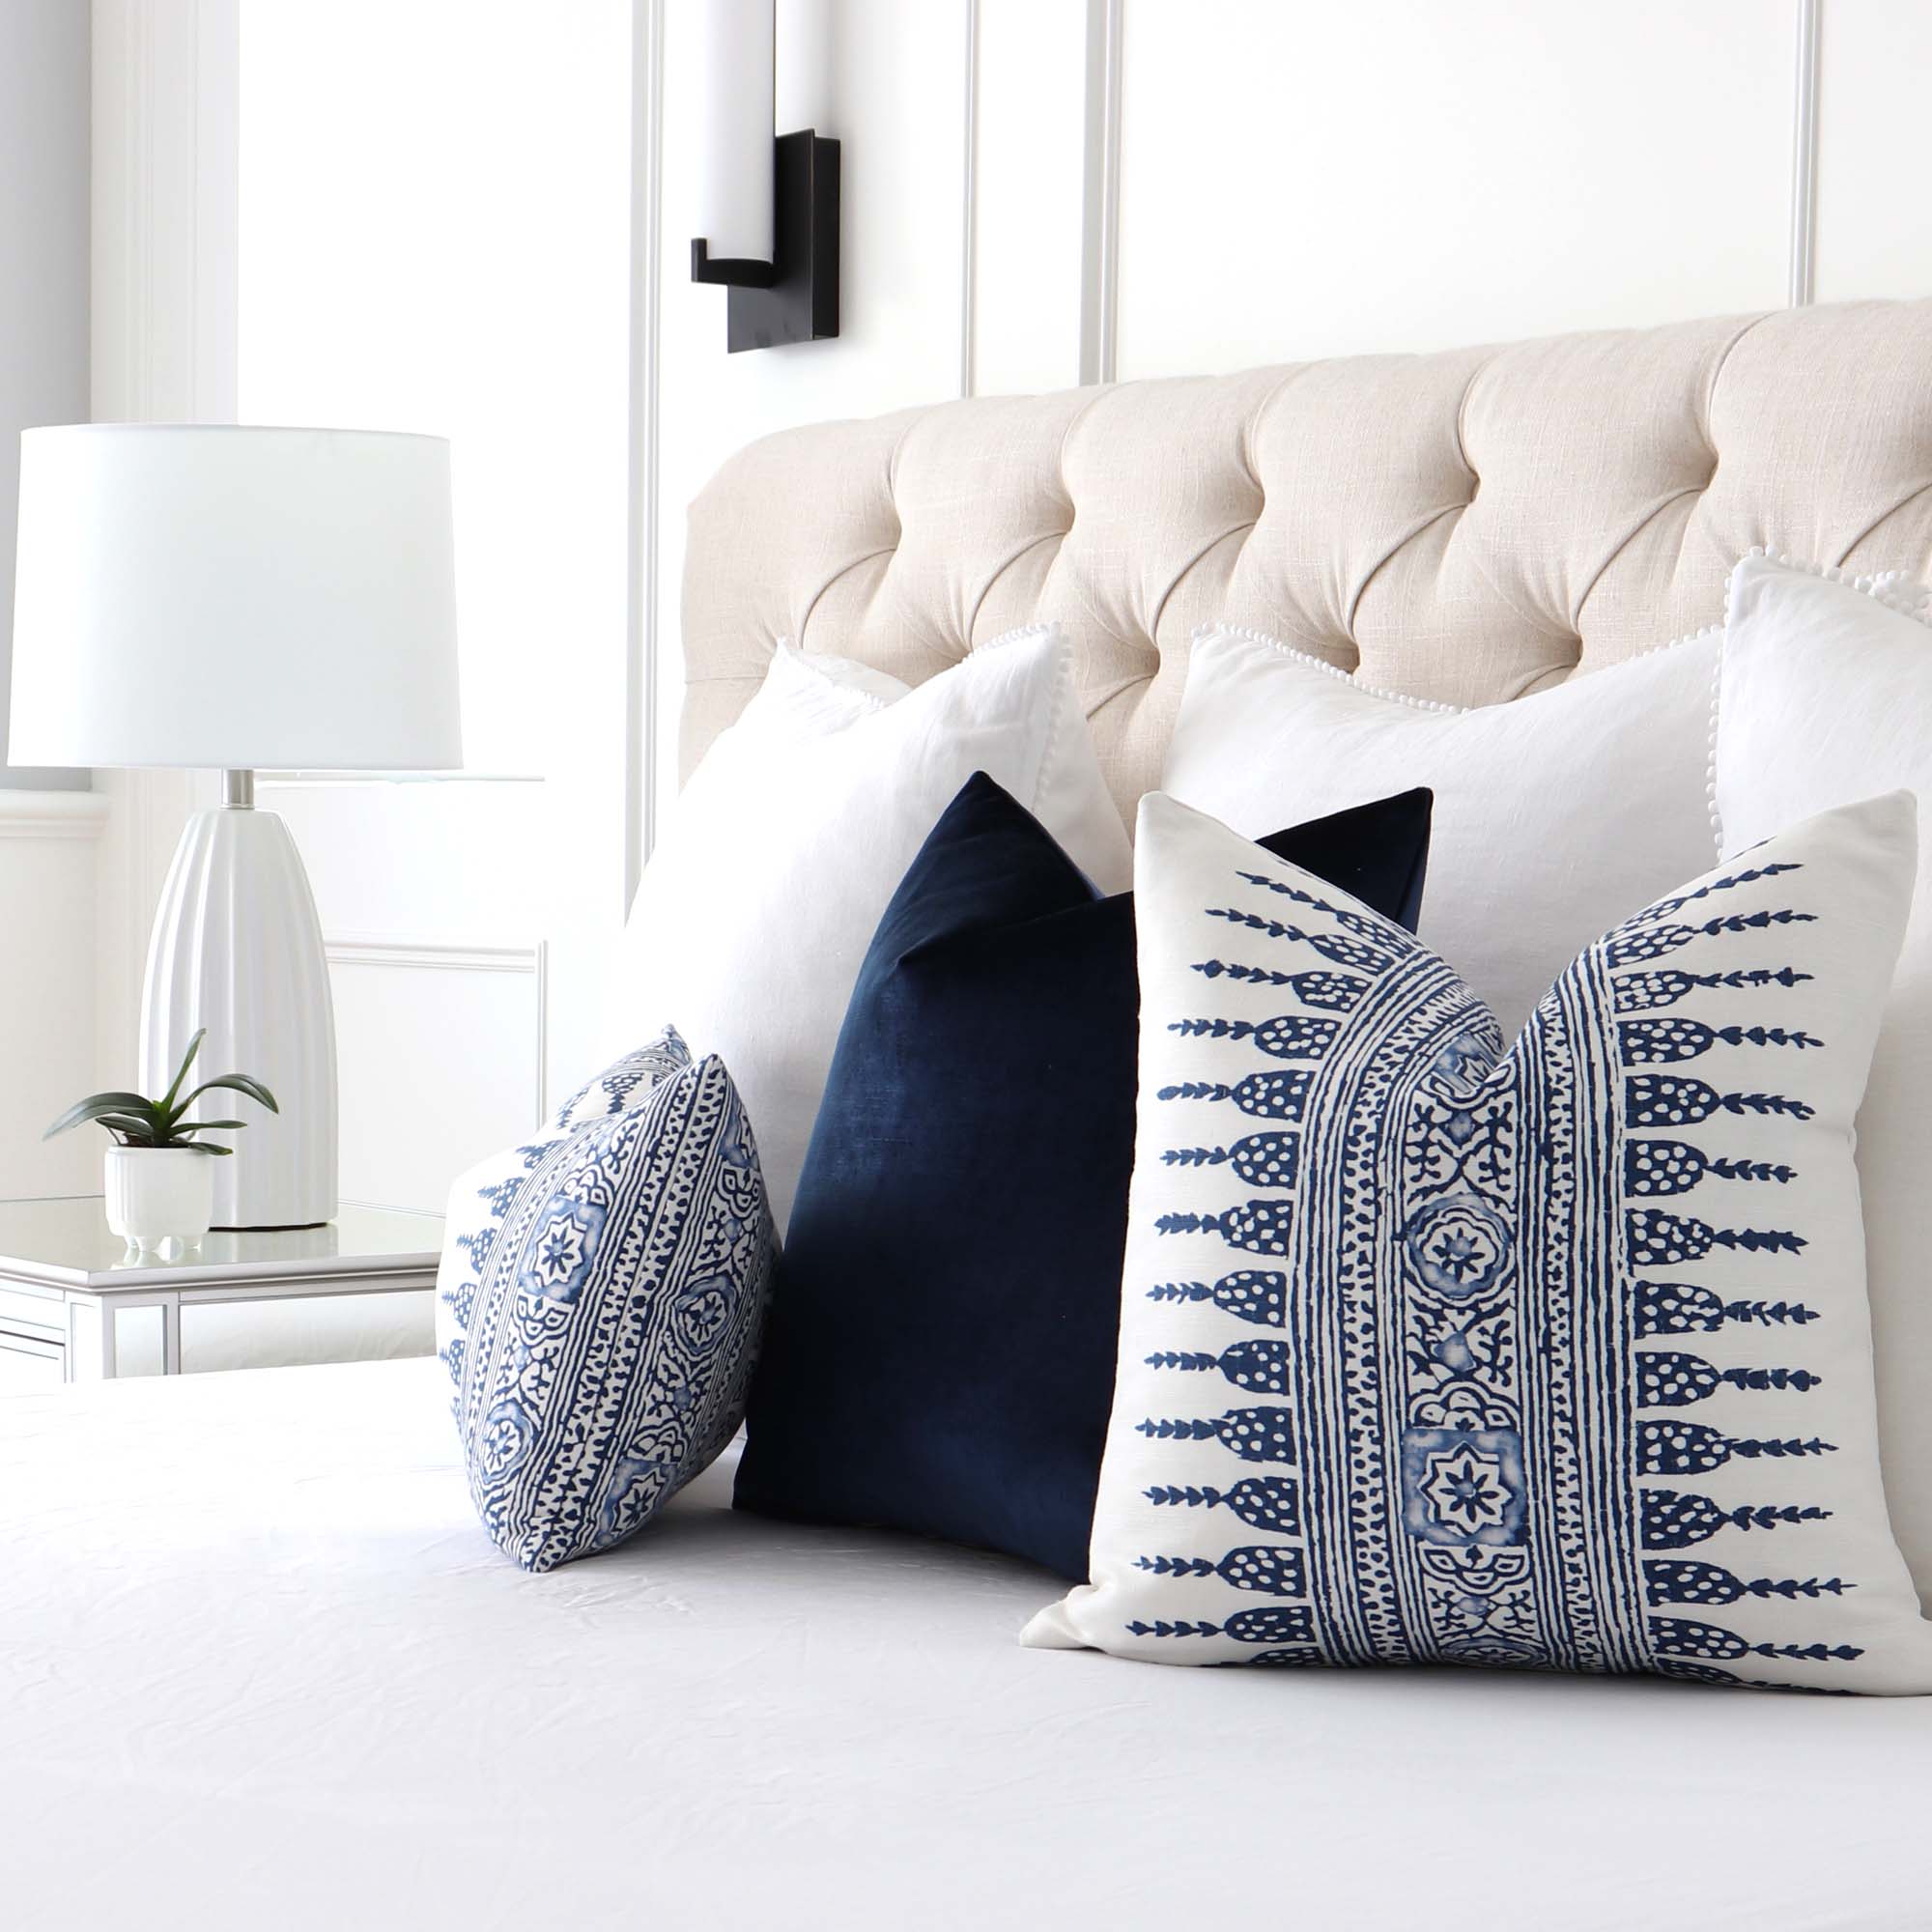 Thibaut Anna French Javanese Stripe Navy Blue Designer Luxury Decorative Throw Pillow Cover